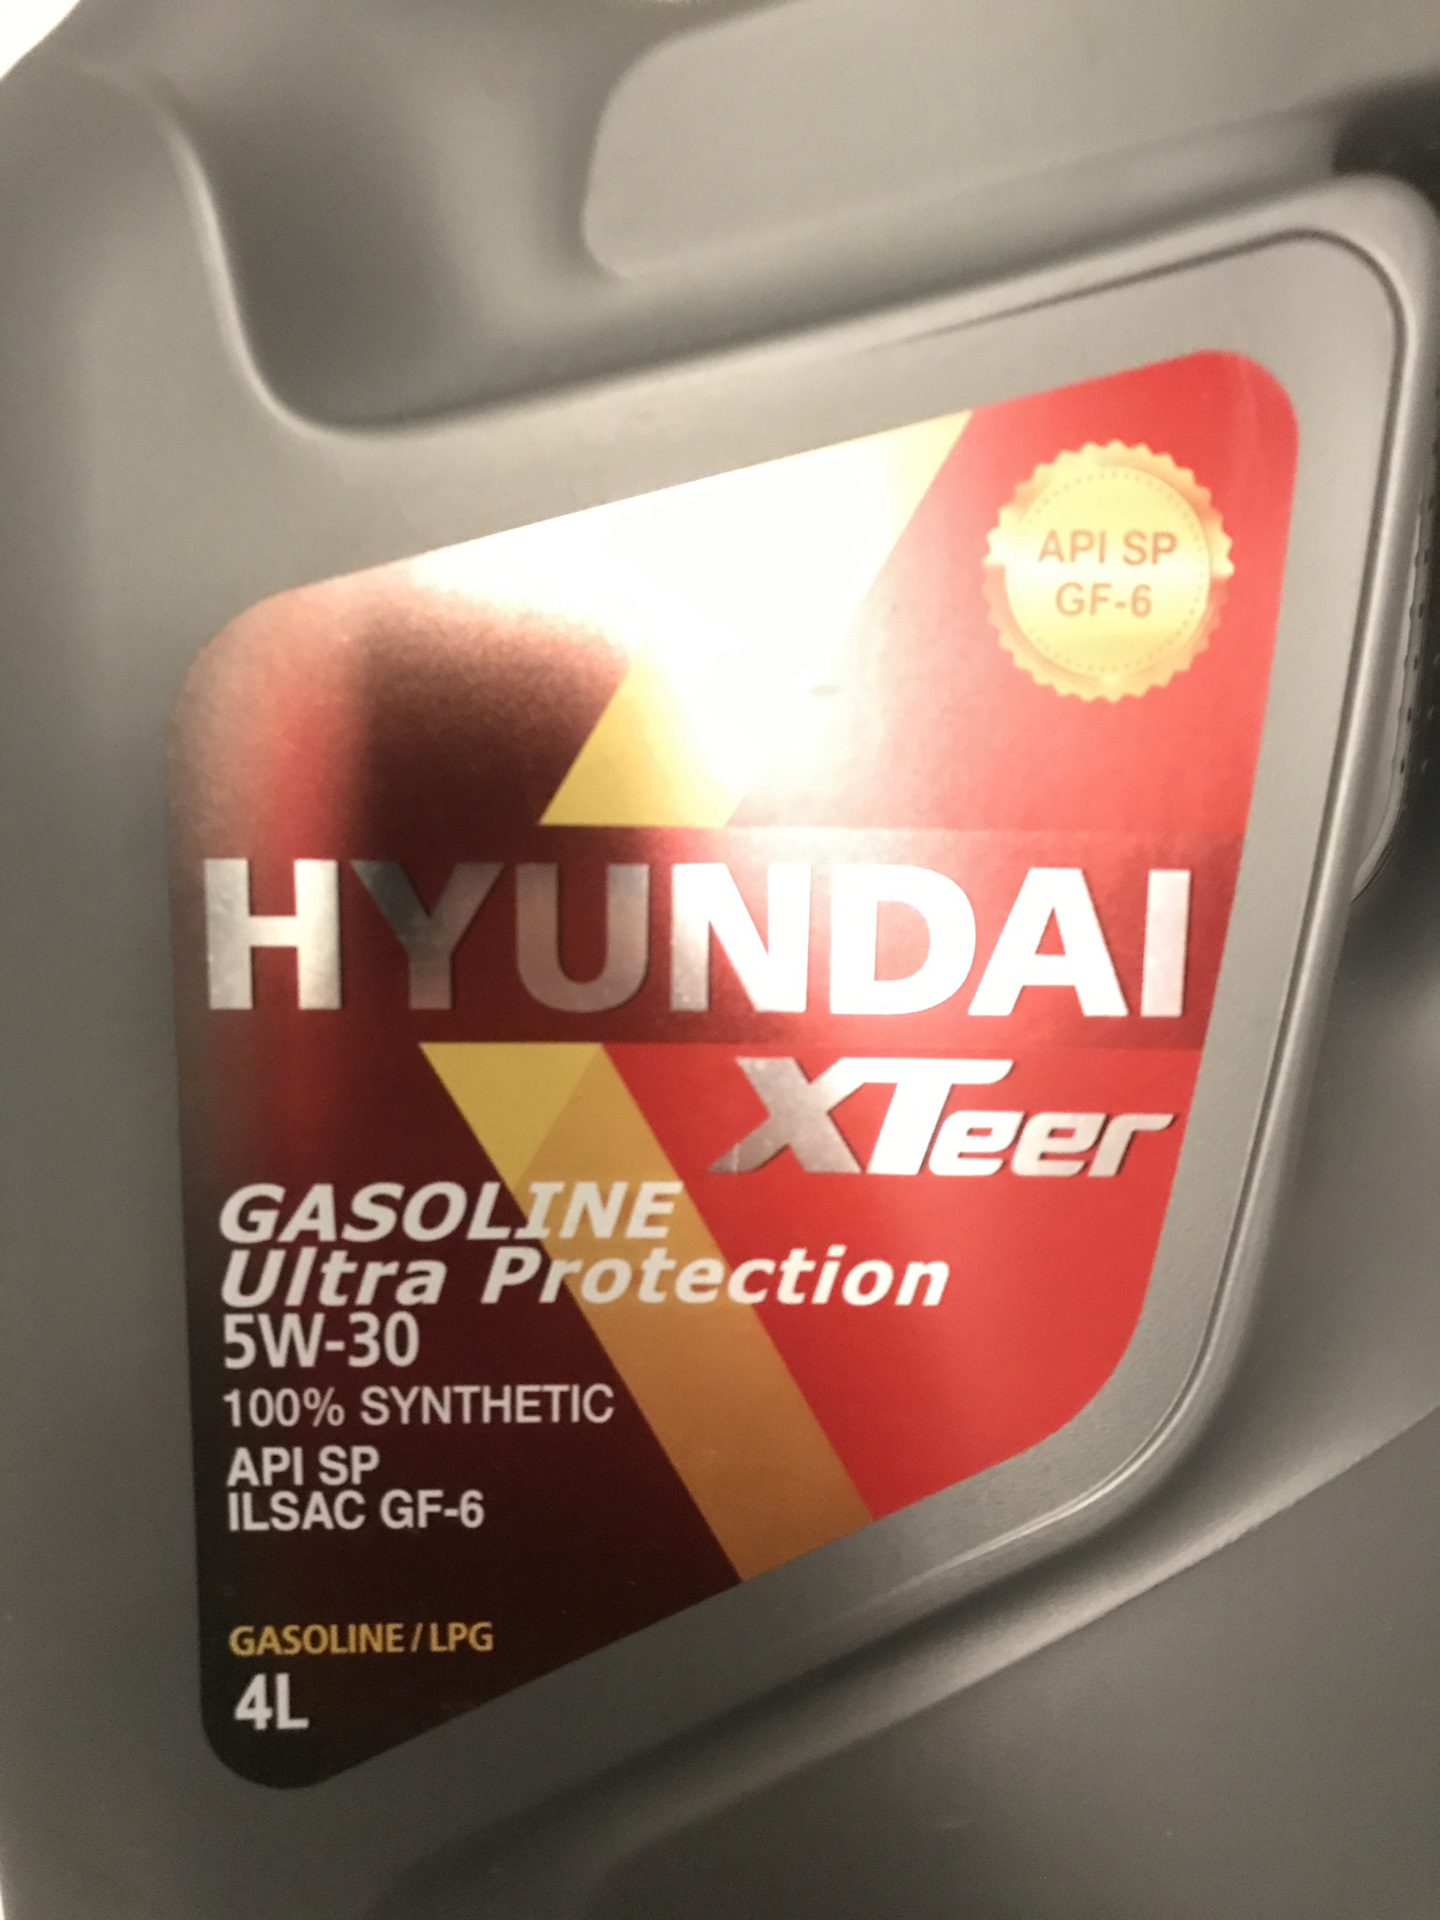 Hyundai xteer gasoline ultra 5w 30. XTEER gasoline Ultra Protection 5w30 200л.